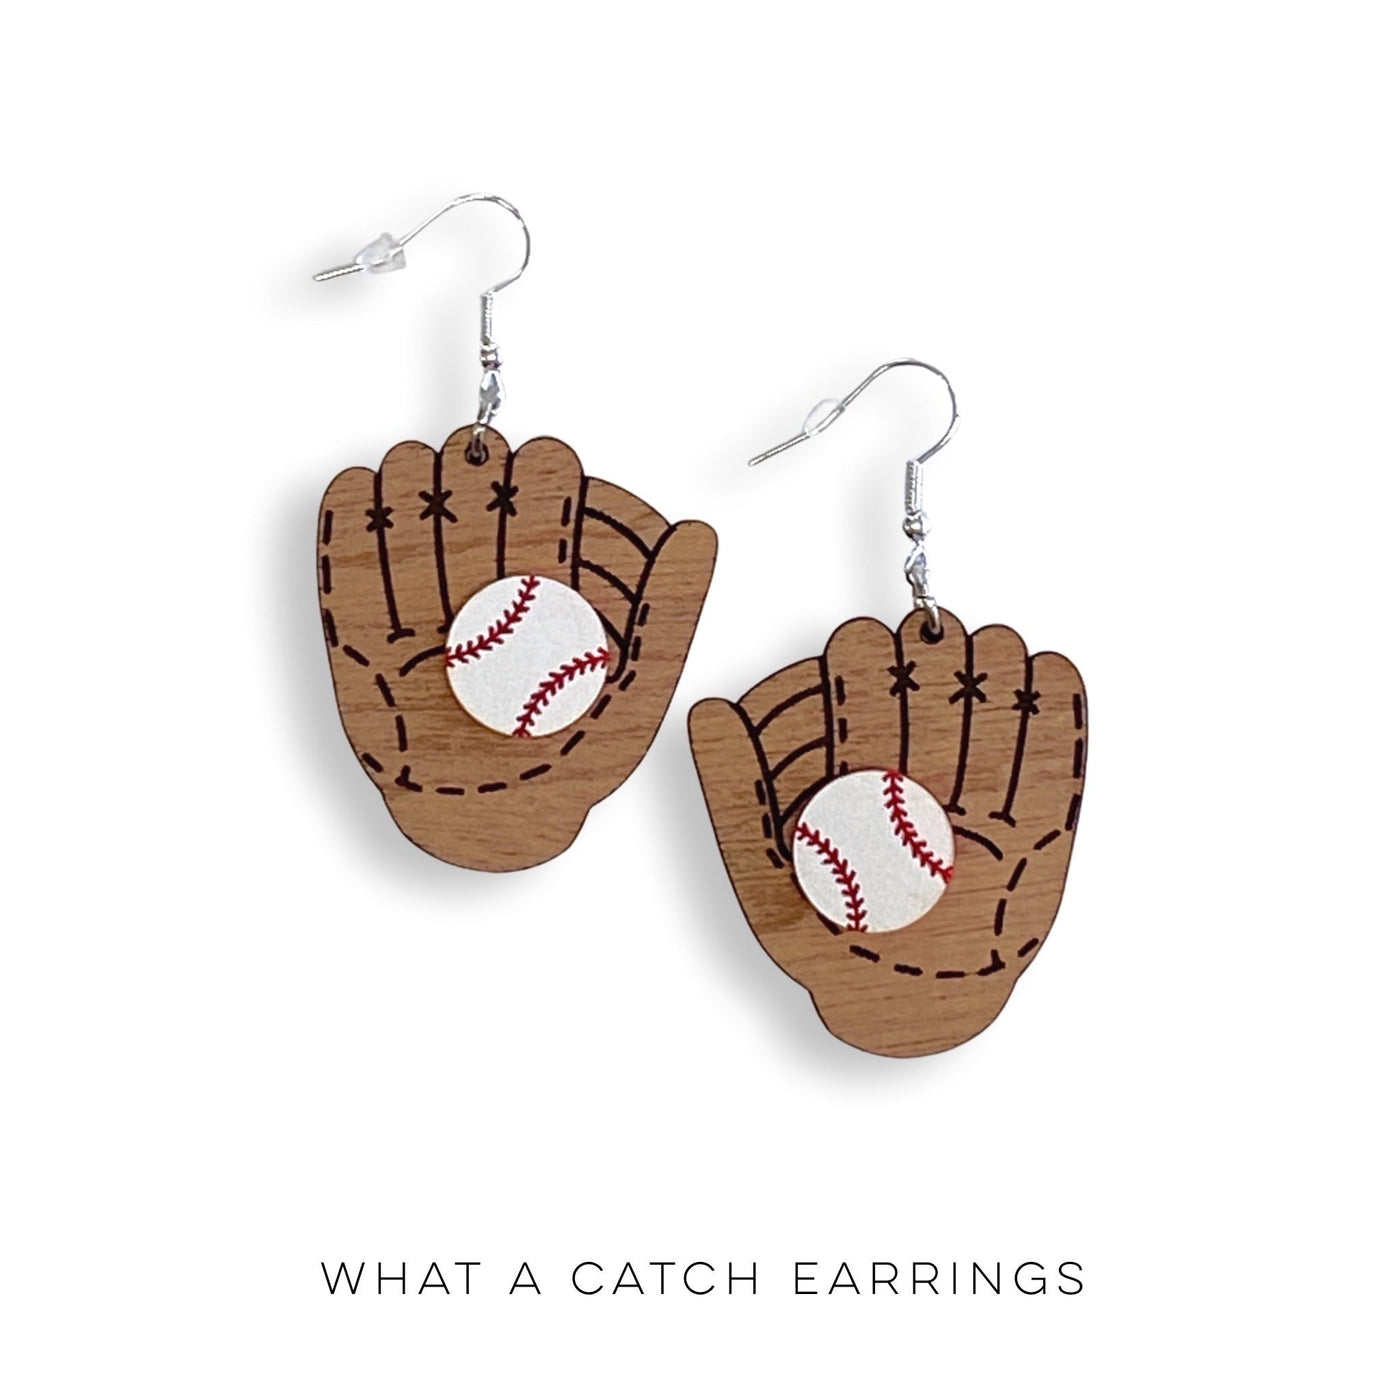 What a Catch Earrings